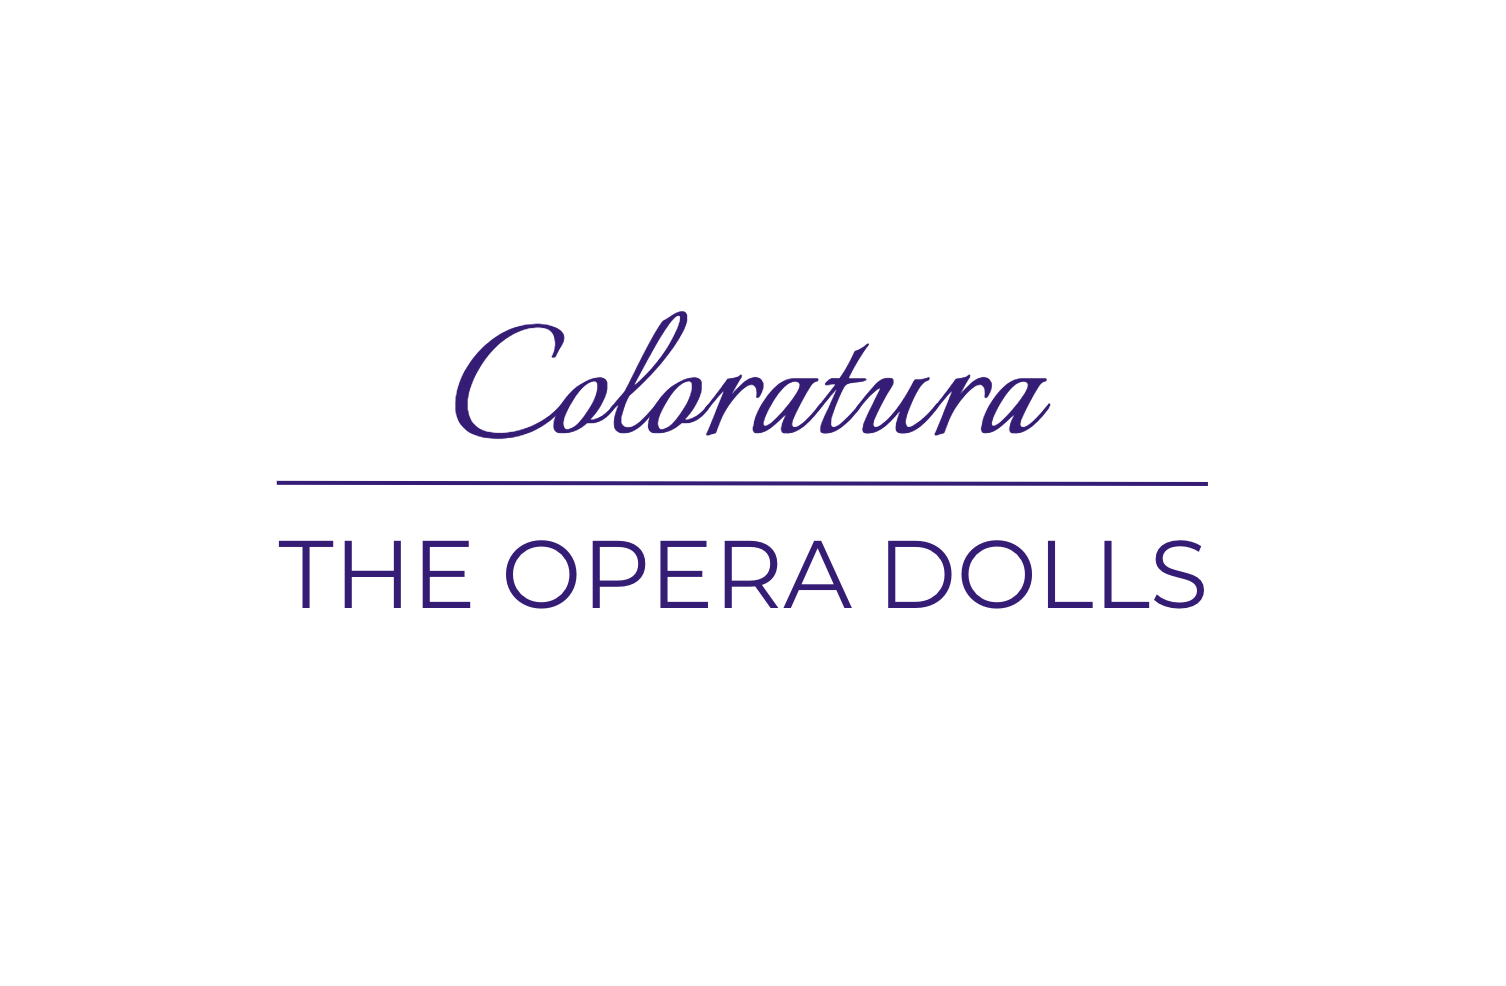 The Opera Dolls